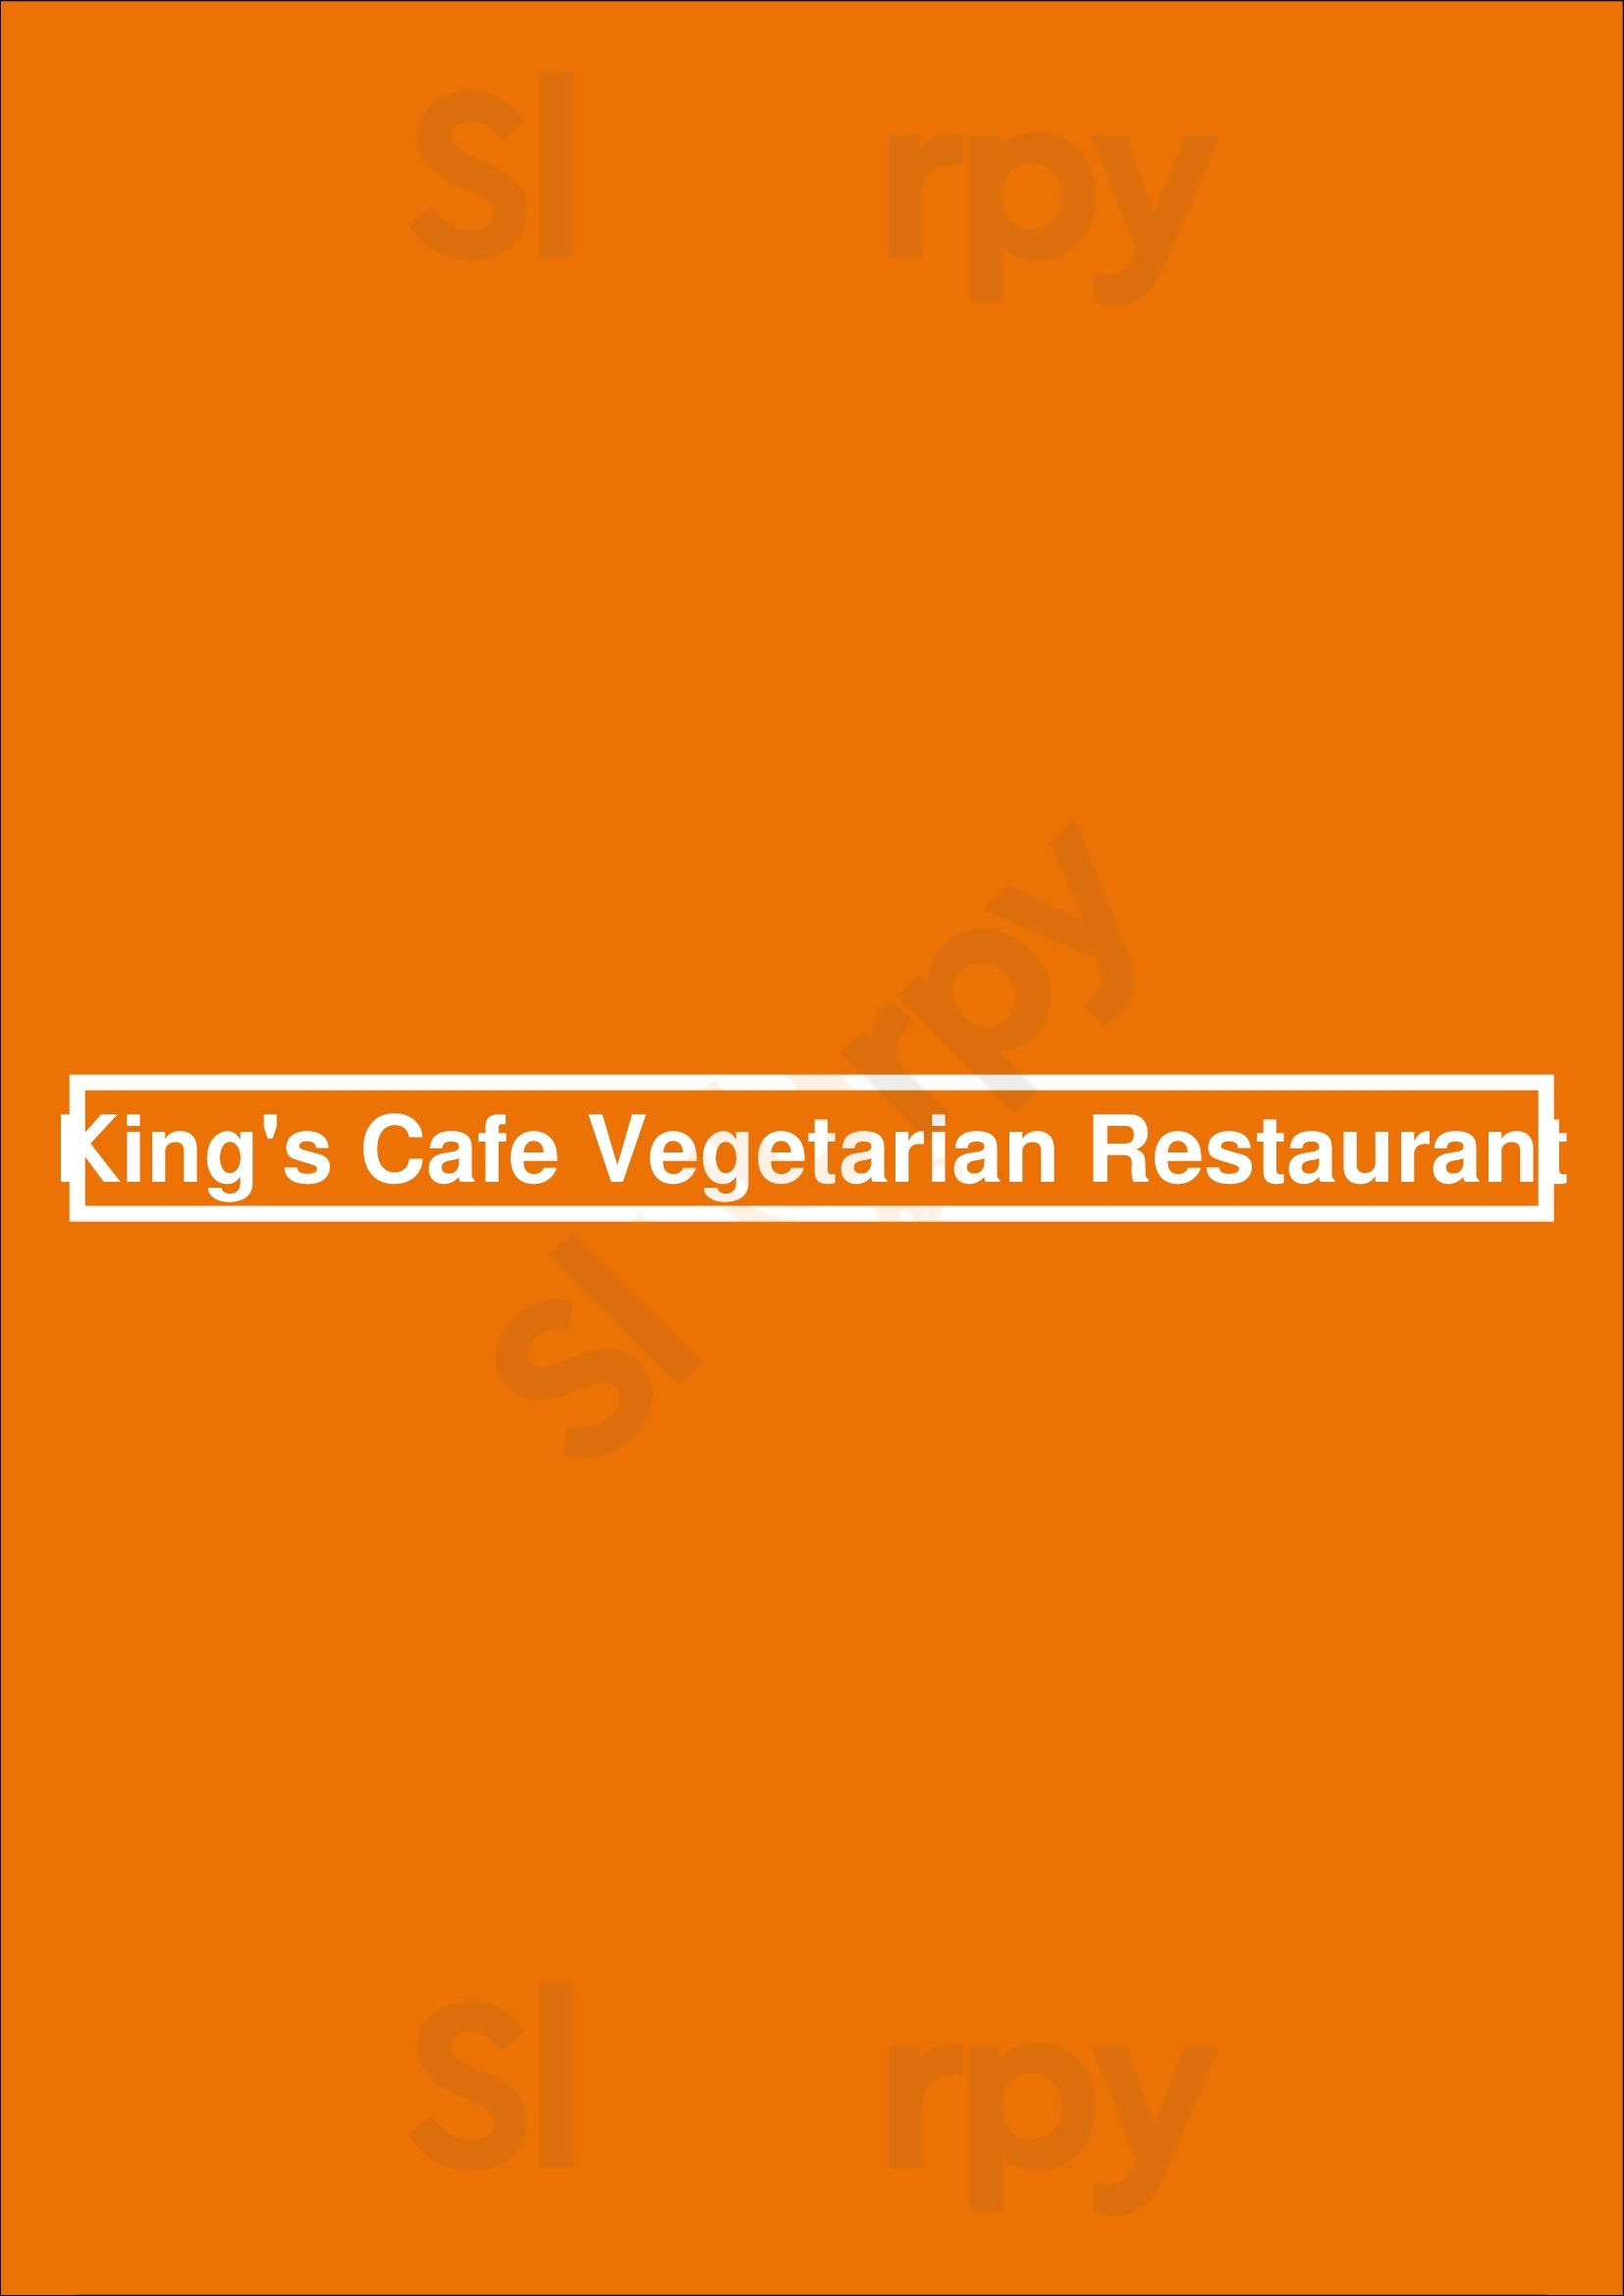 King's Cafe Vegetarian Restaurant Toronto Menu - 1